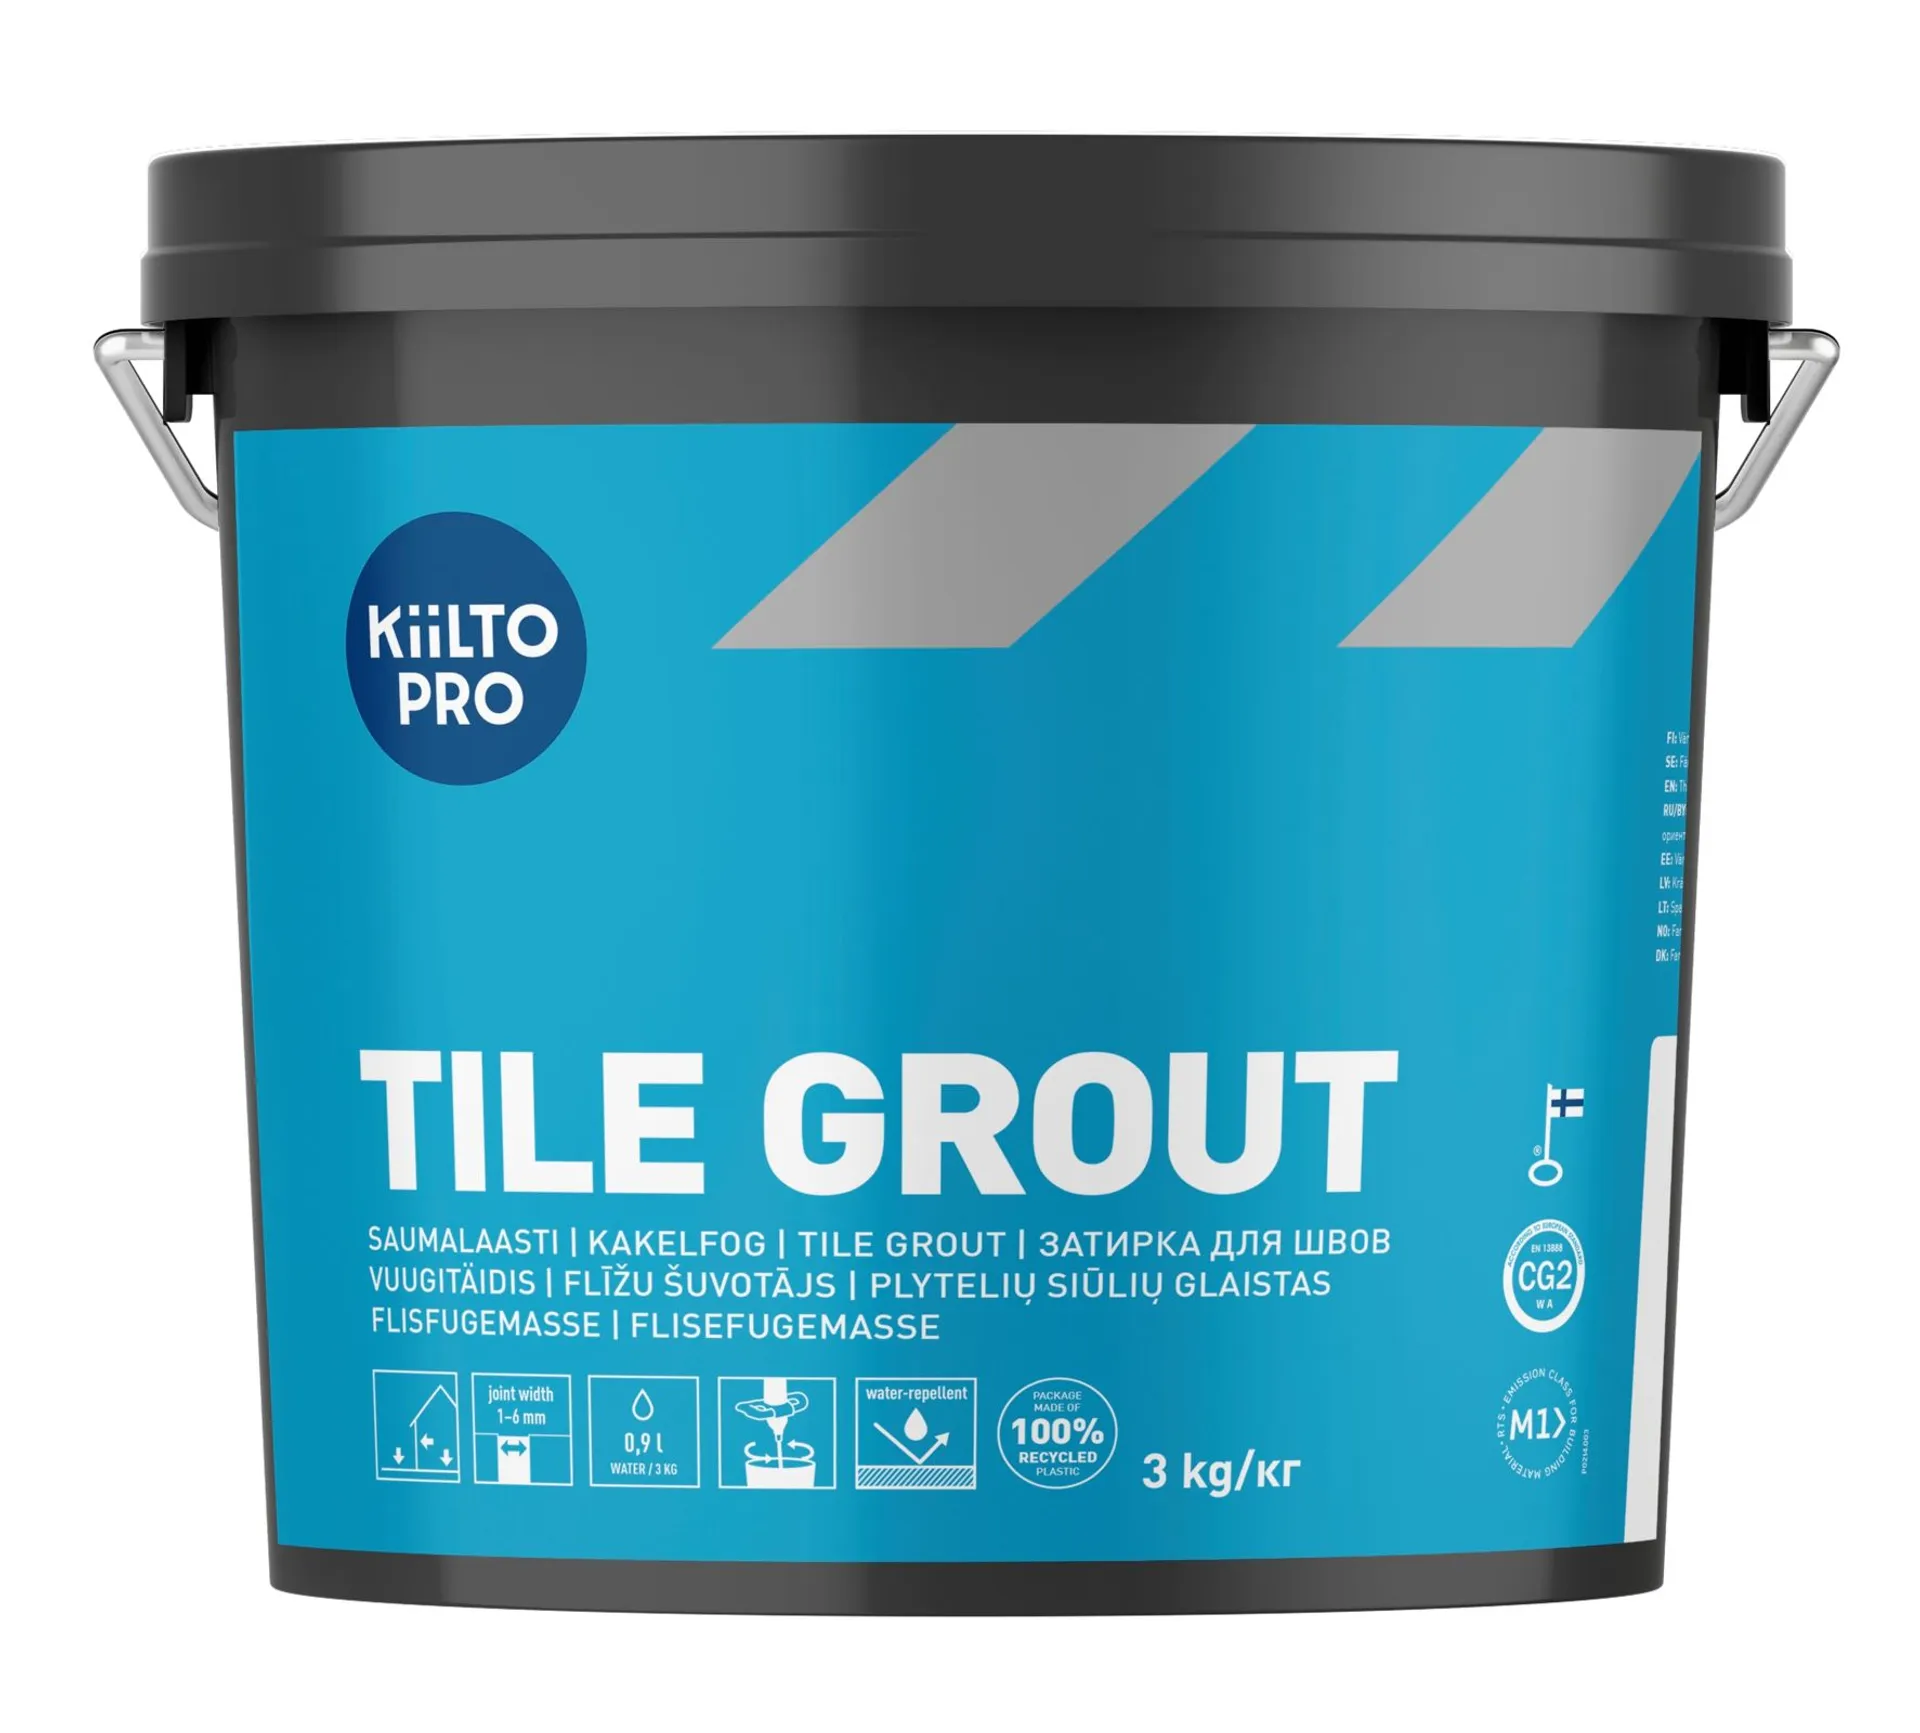 Kiilto Pro Tile grout saumalaasti 50 graphite black 3 kg